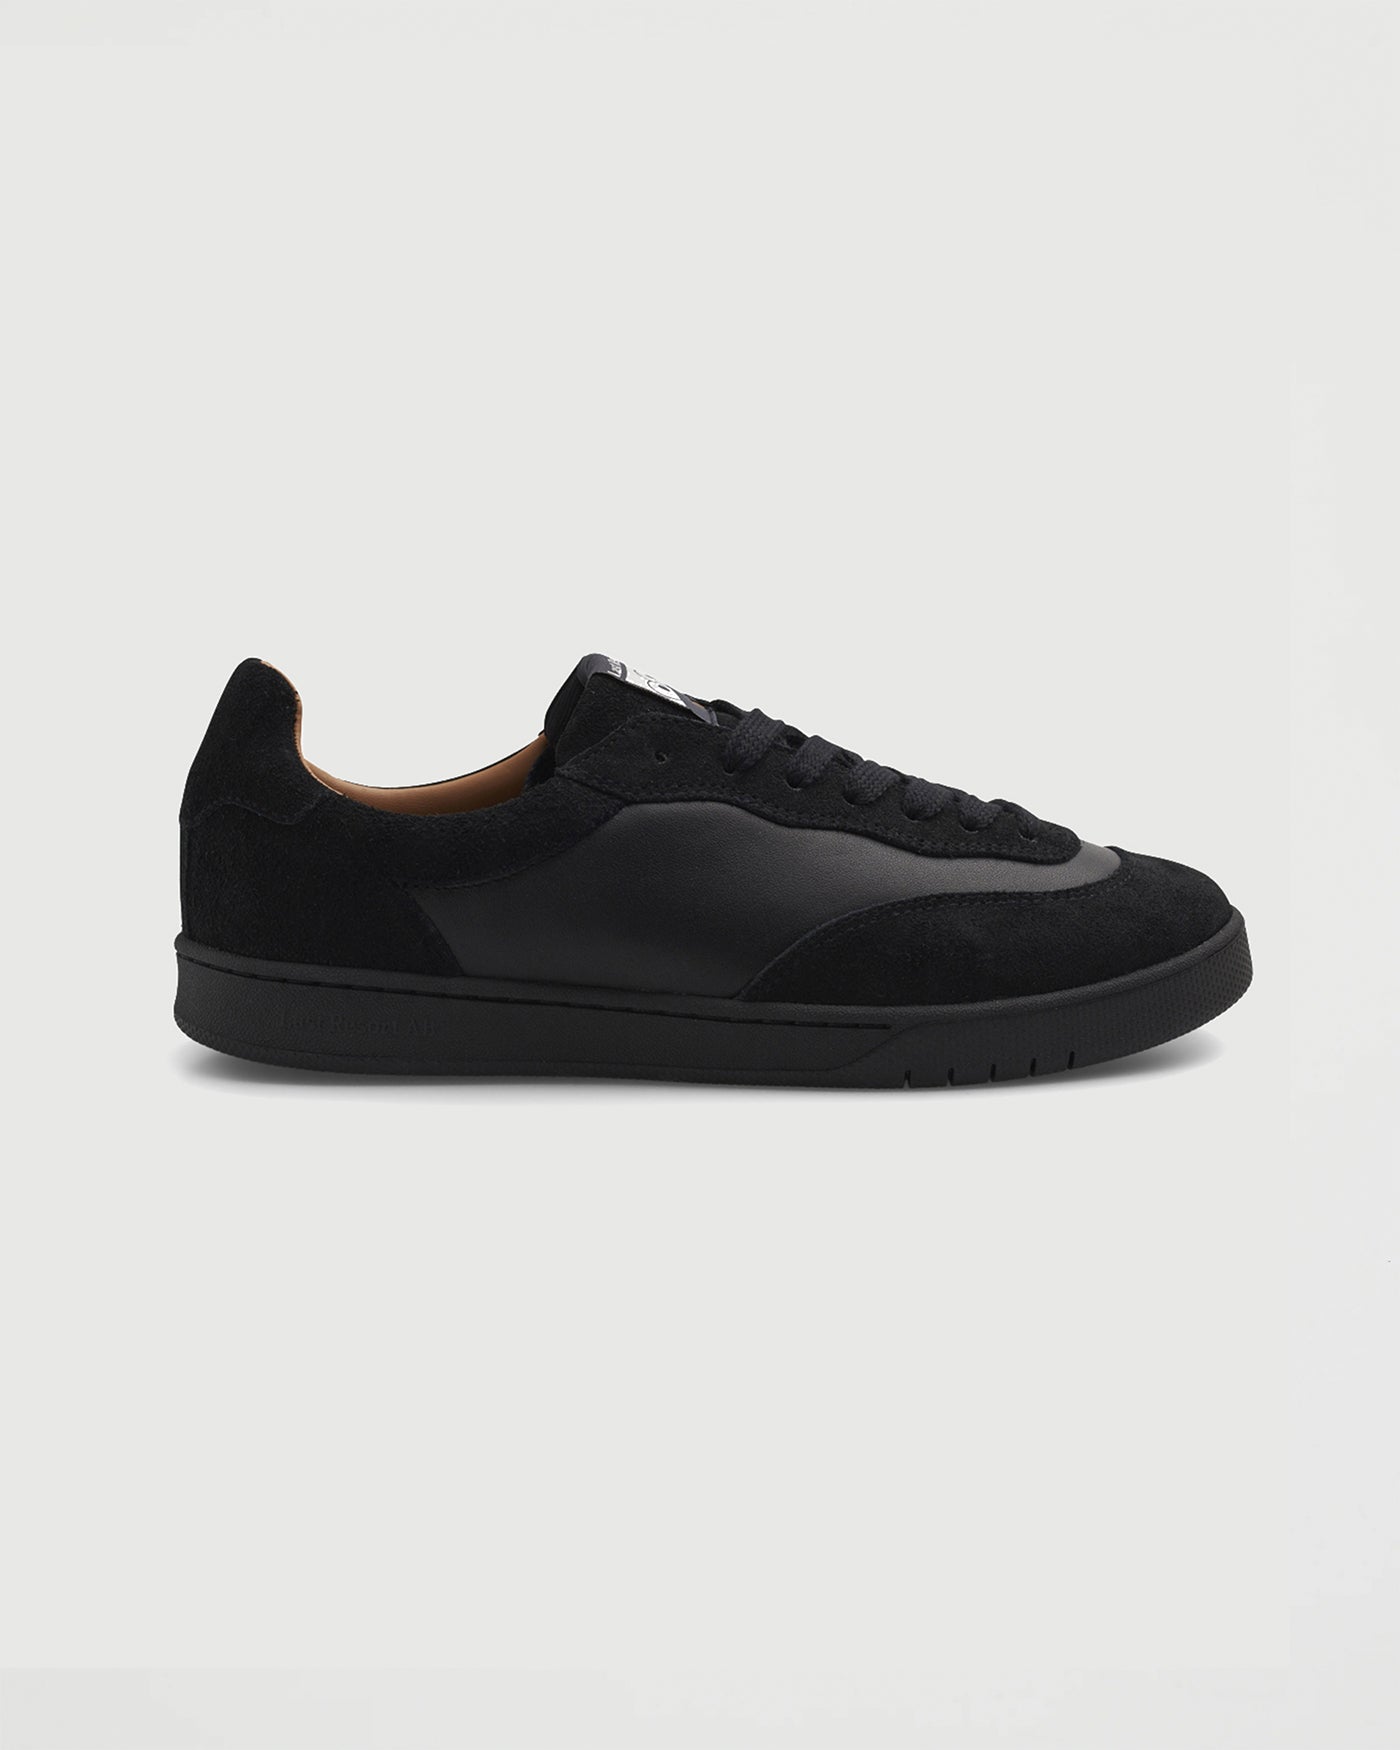 Last Resort AB CM001 Suede/Leather Lo Black/Black Shoes Sneakers Unisex